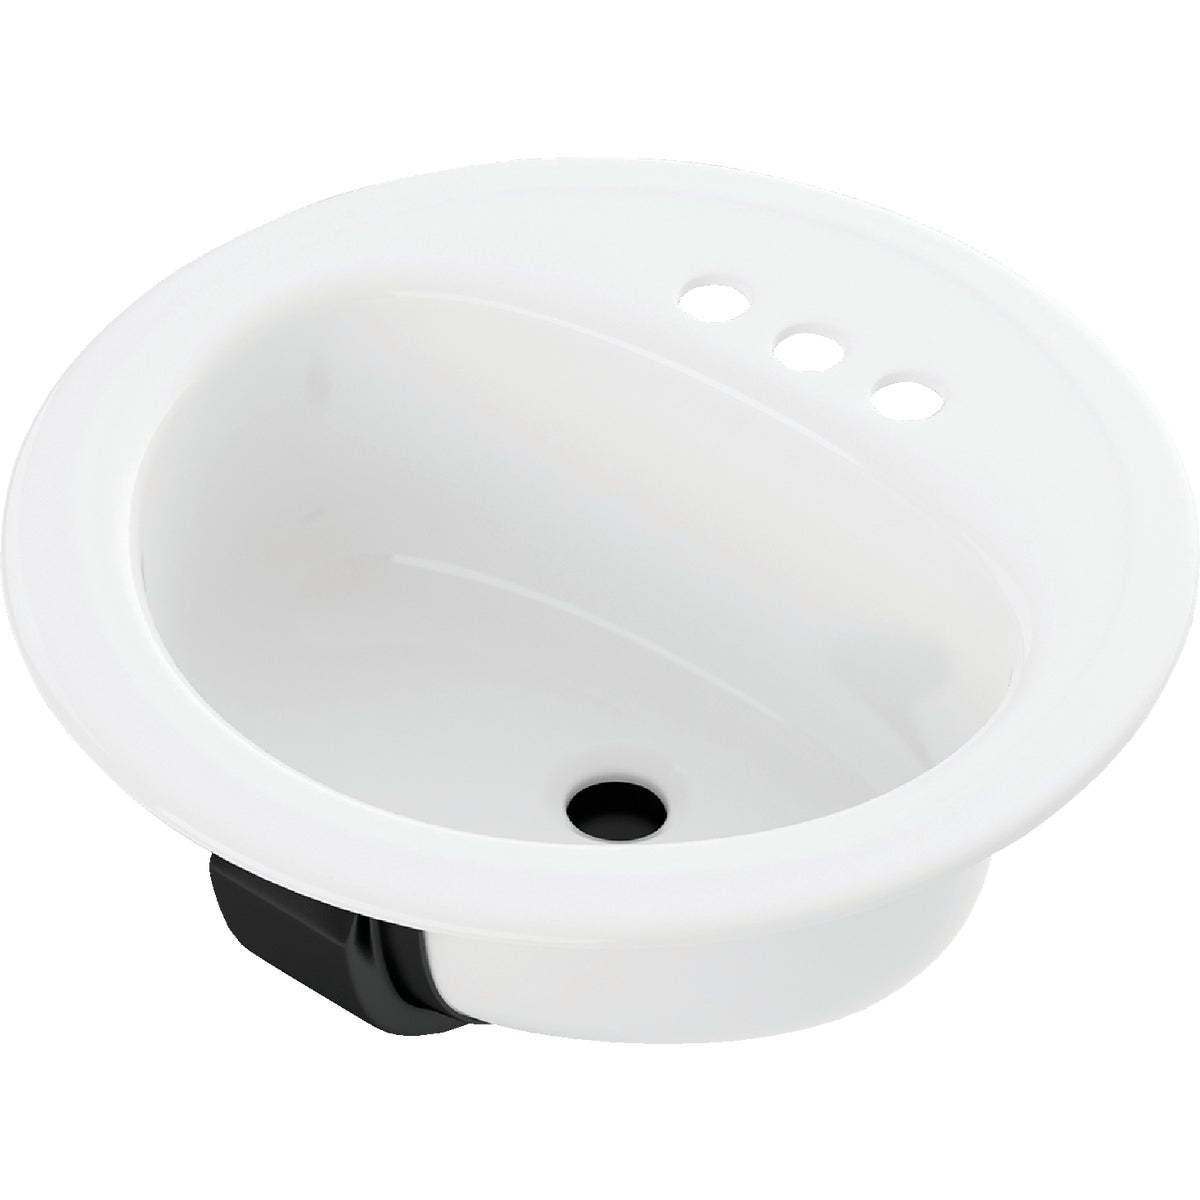 Item 401871, The Laurel 19 round self rimming porcelain enamel lavatory with 4 